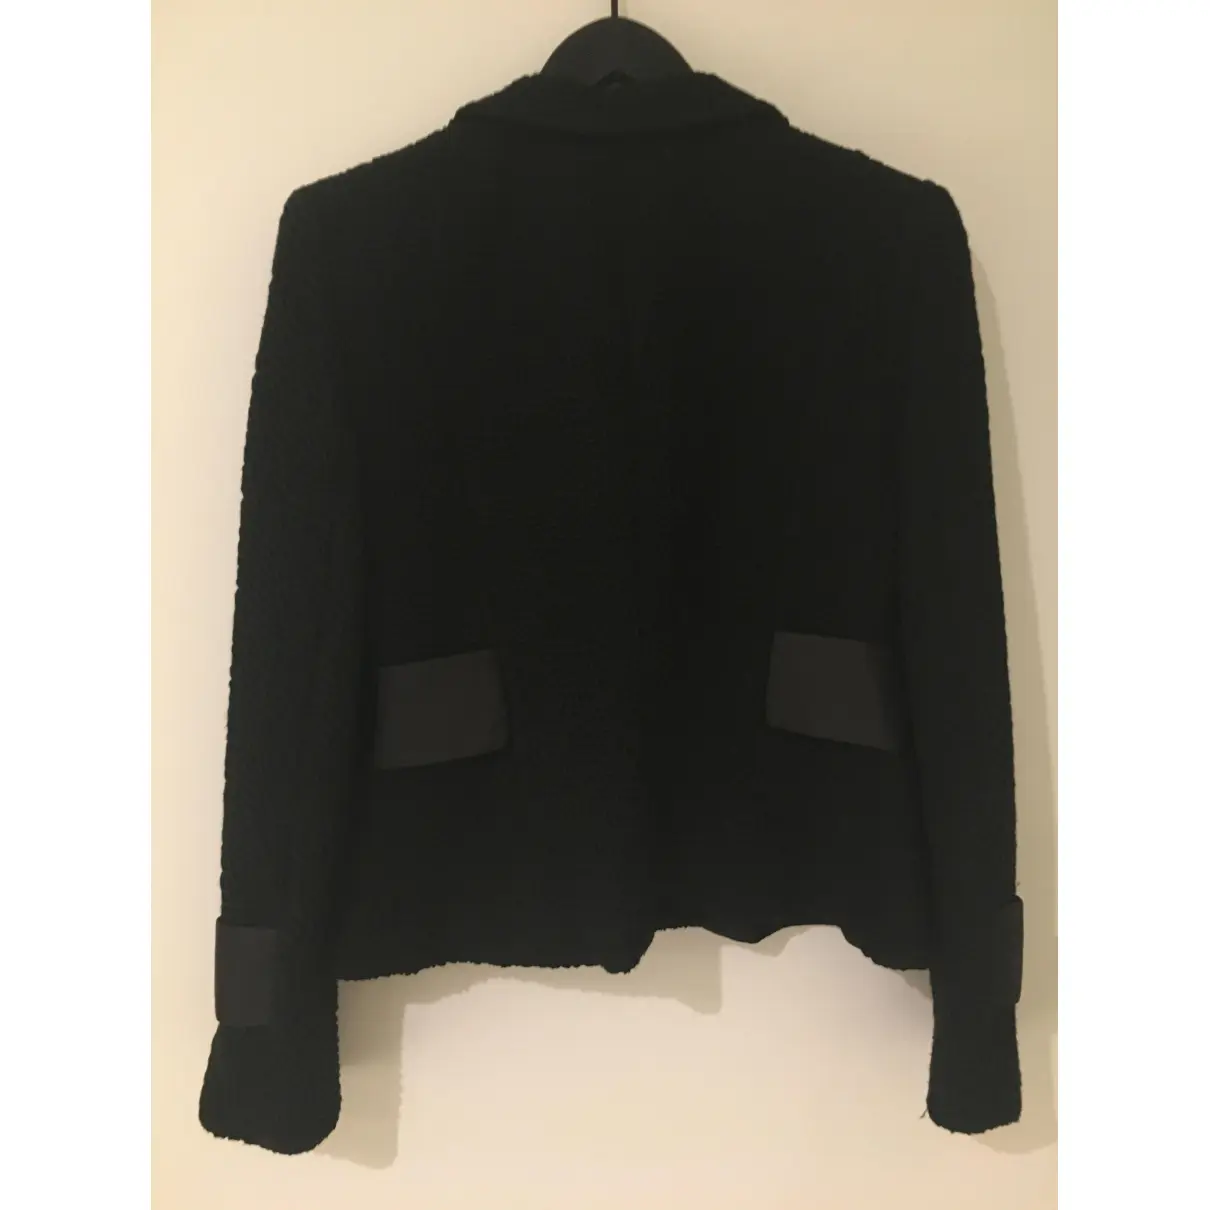 Buy Giorgio Armani Black Polyester Jacket online